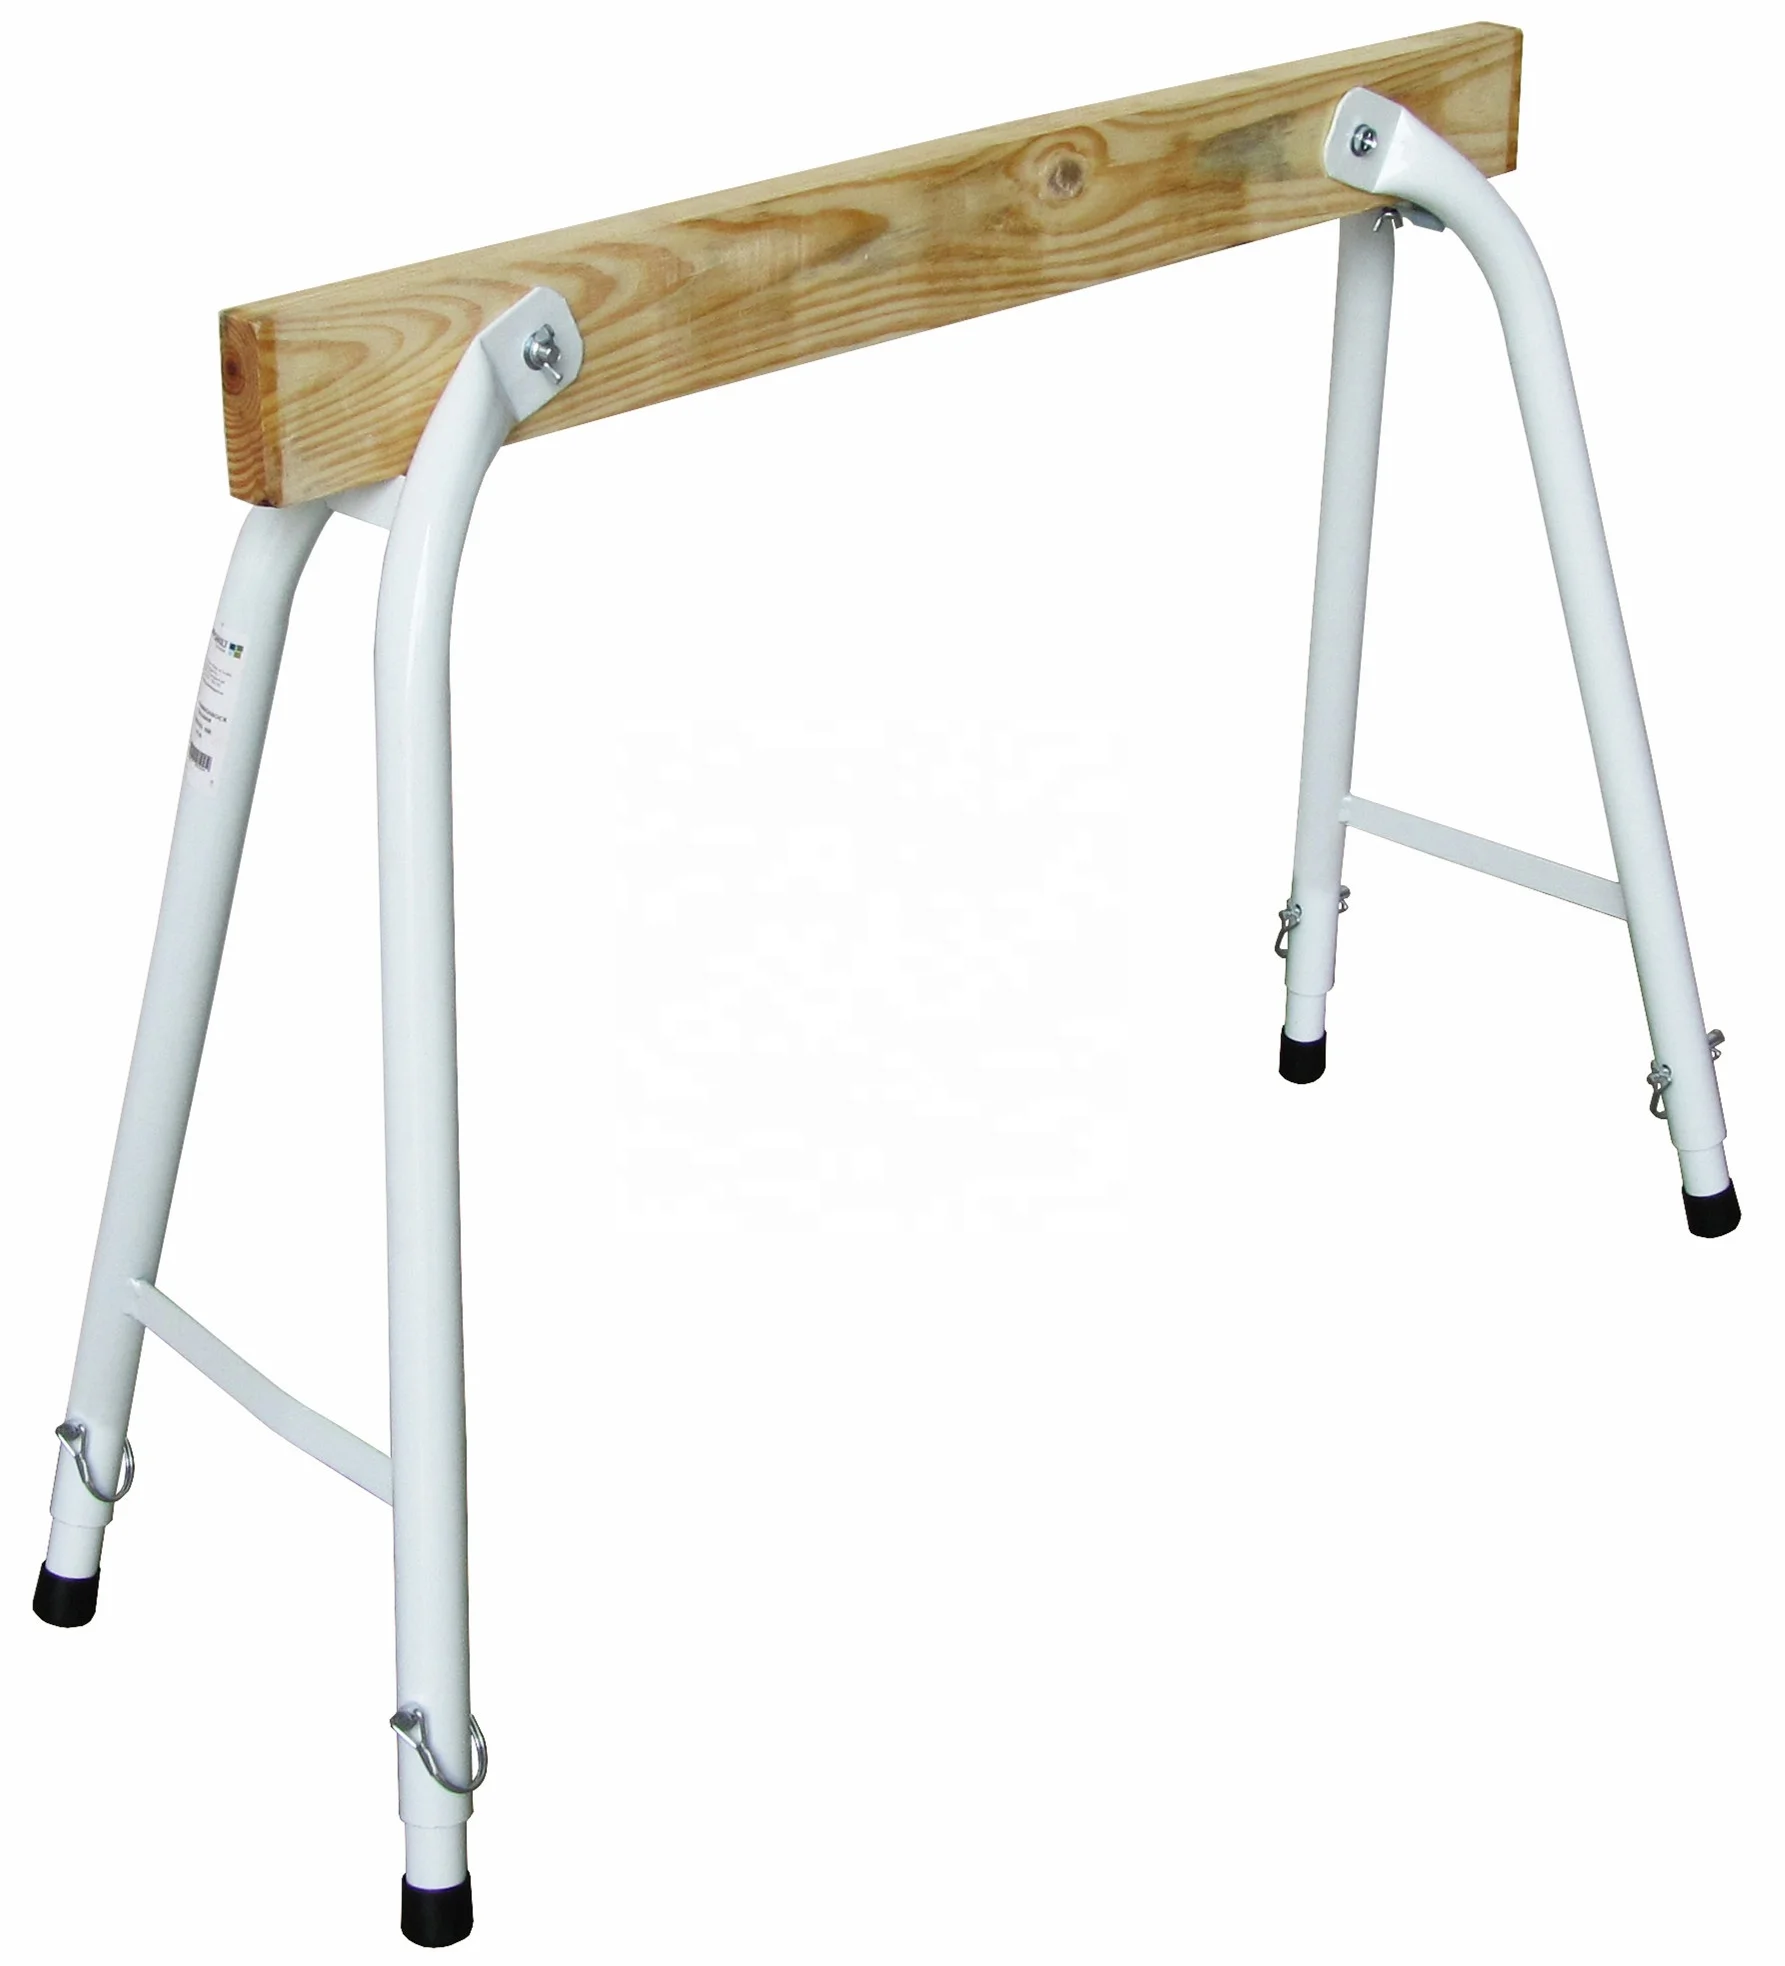 
DX 2040 Metal saw horse trestles Steel wood platform Wood bench for sawing wood  (1600063387286)